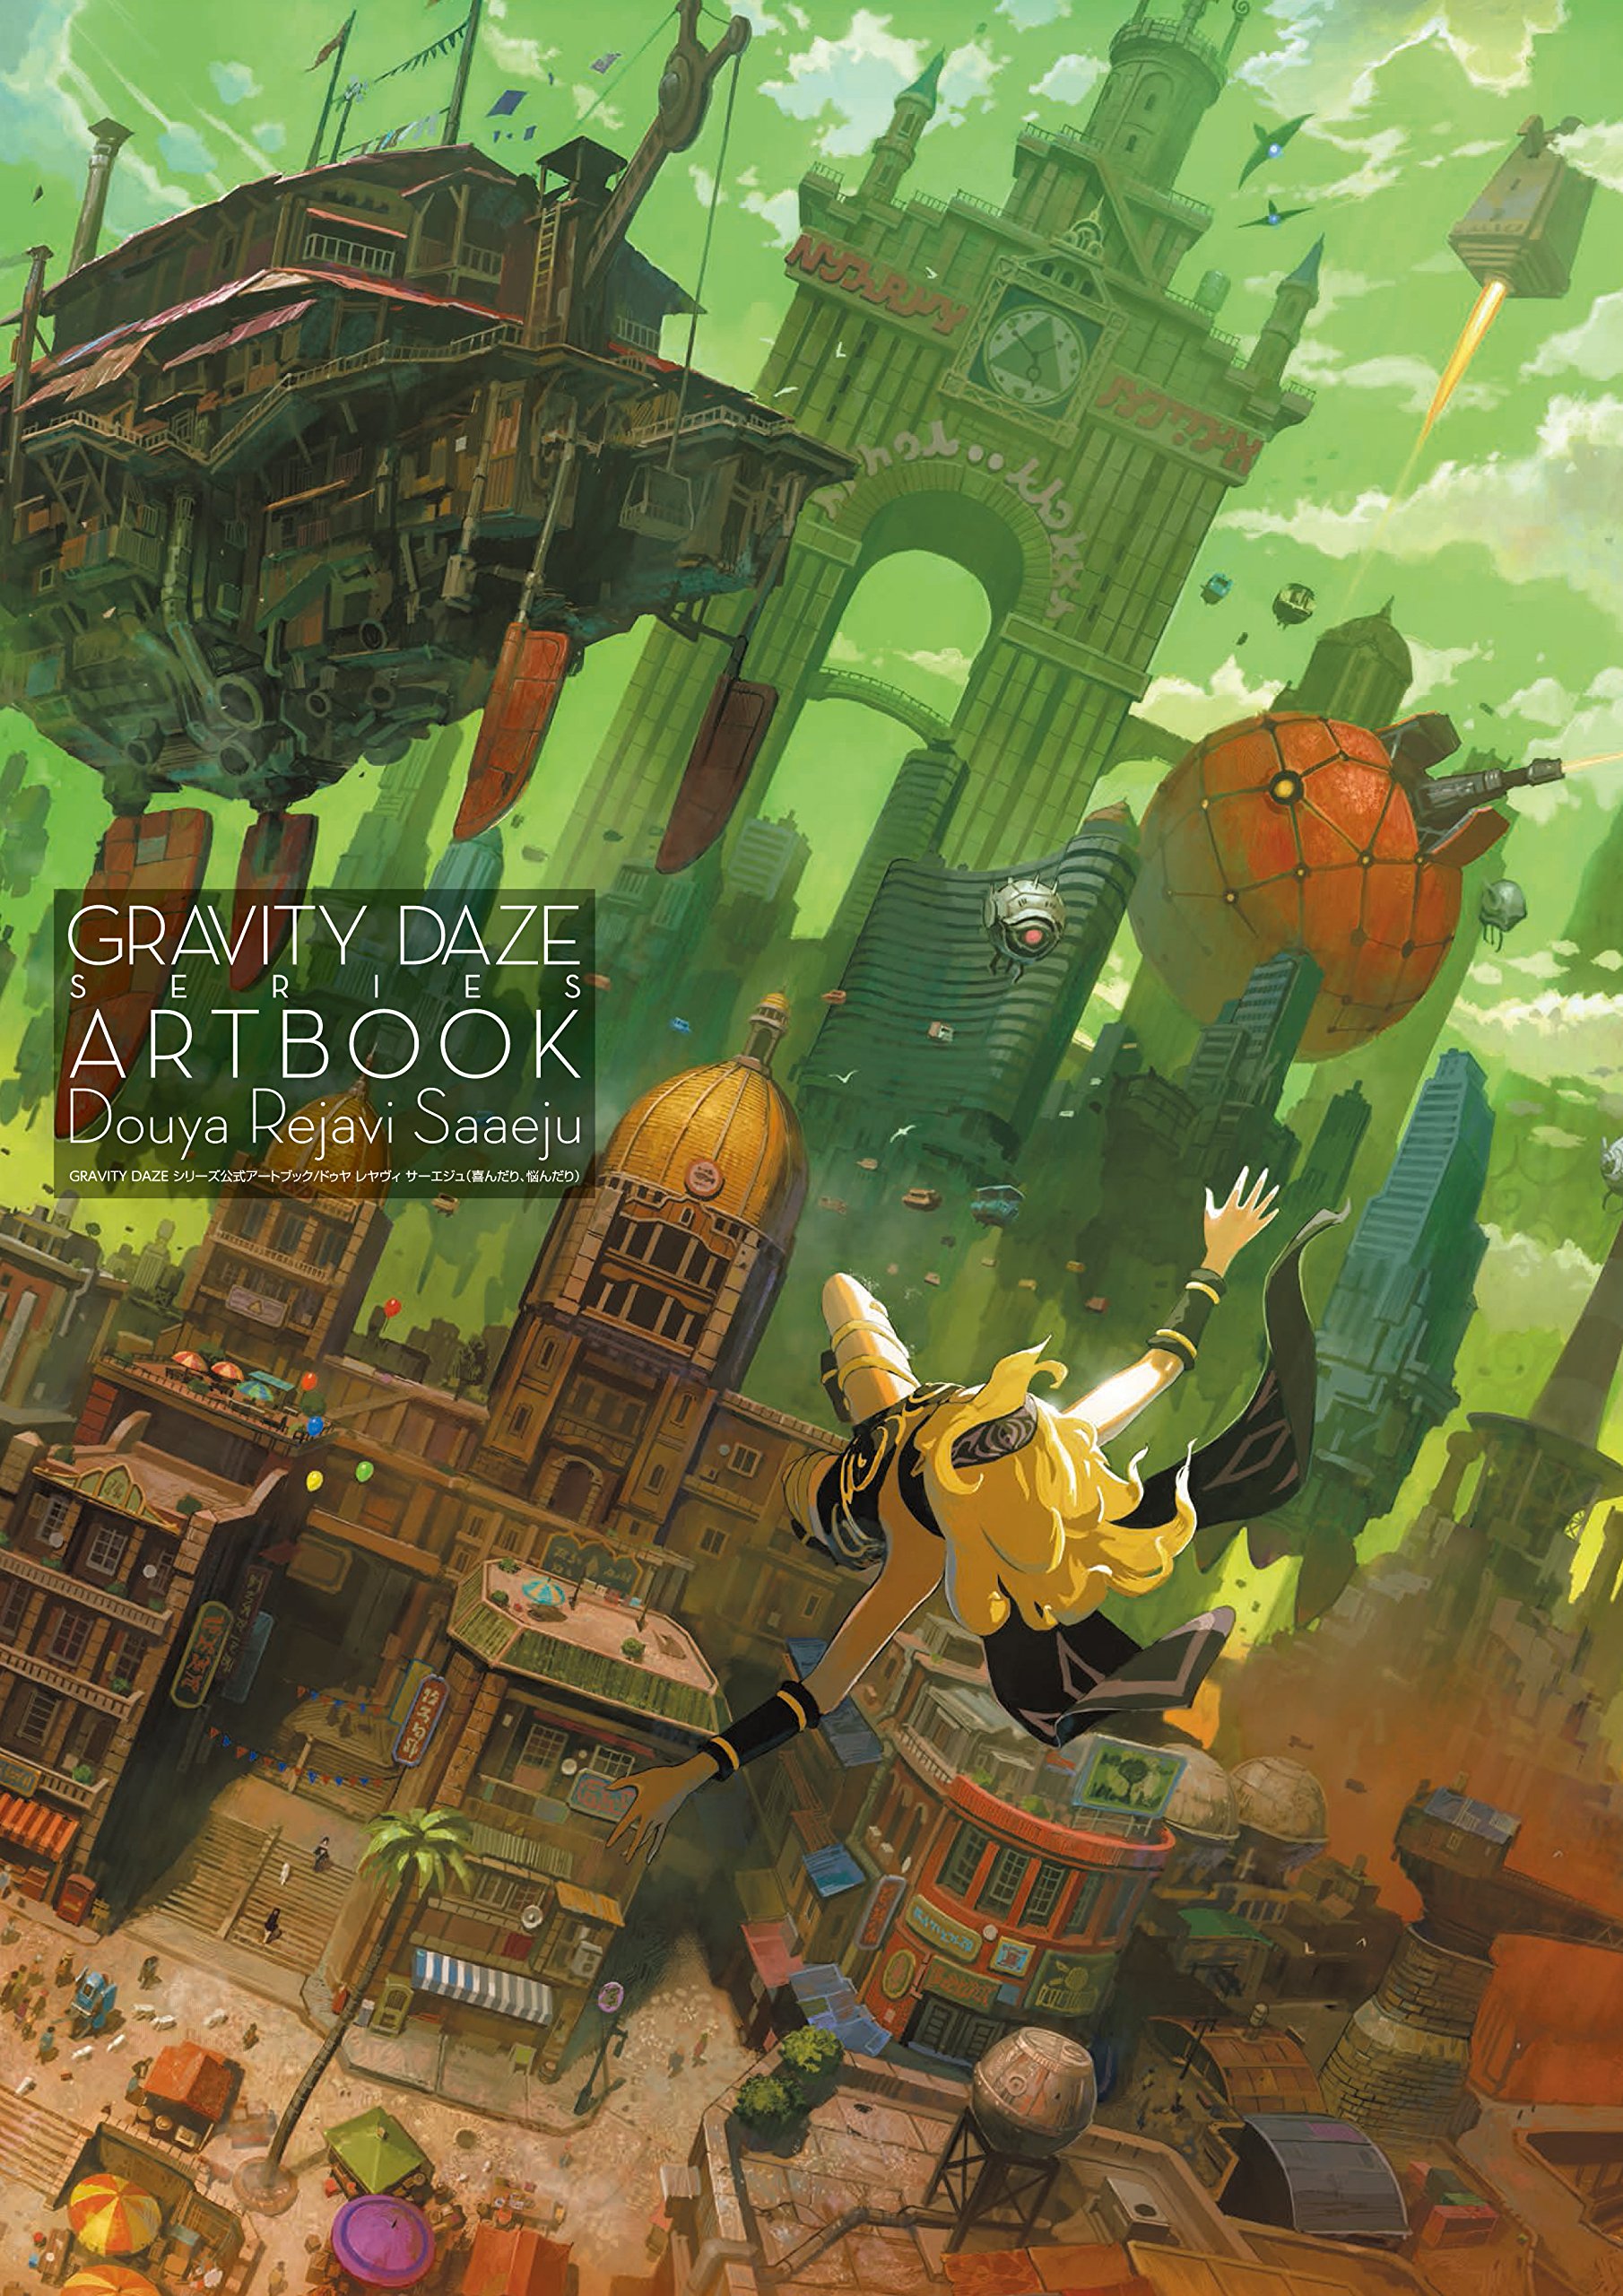 Gravity Daze Series Artbook - Douya Rejavi Saaeju - Cover Art Textless